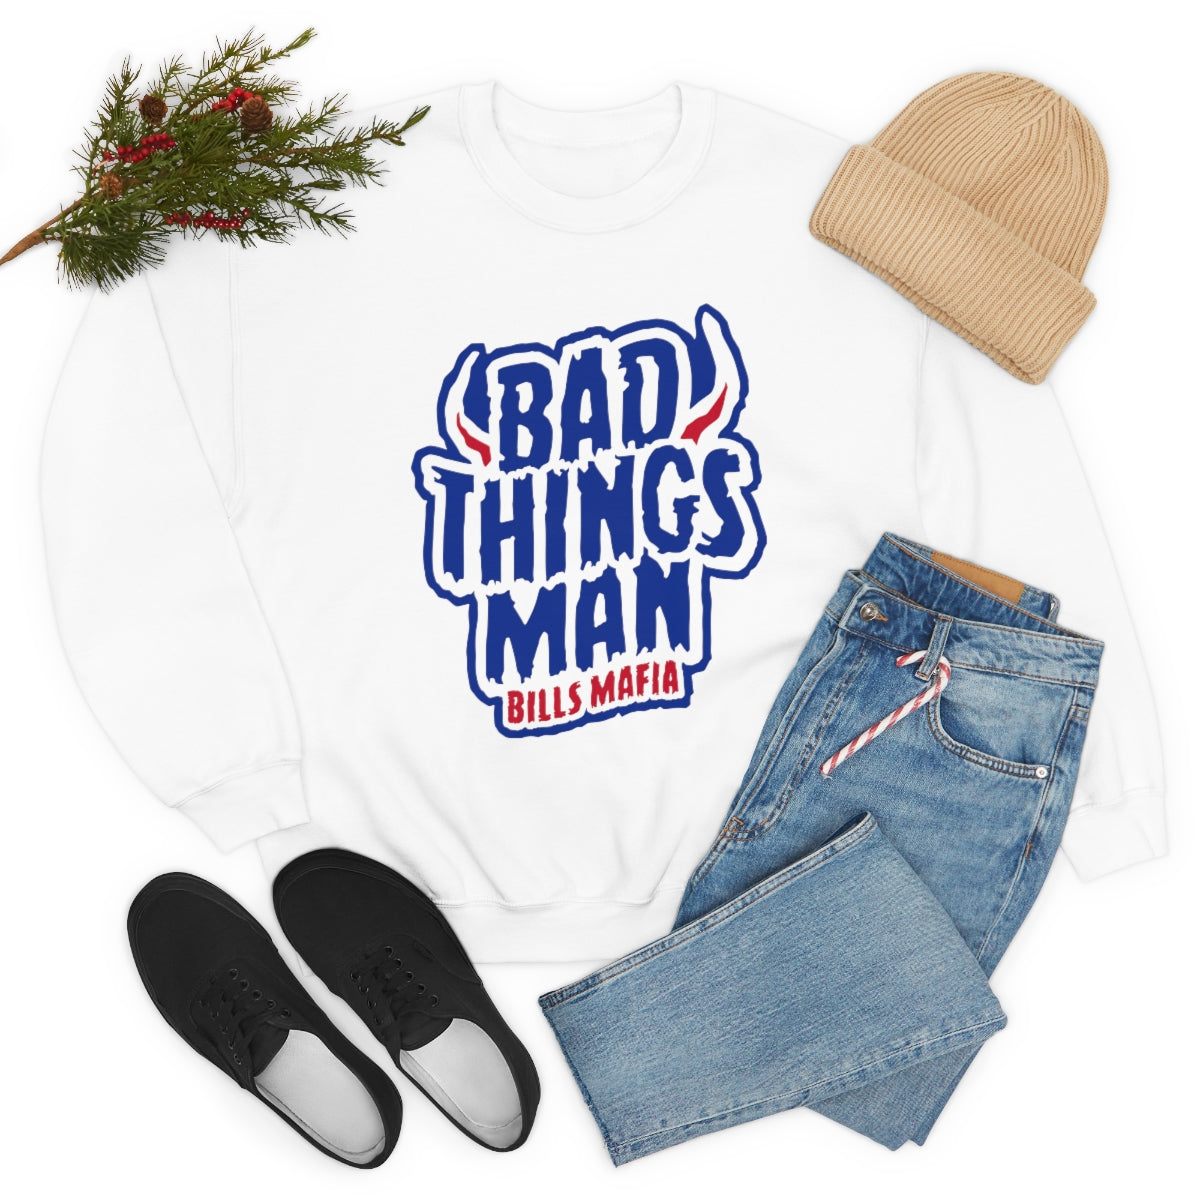 "Bad Thing Man" Heavy Blend™ Crewneck Sweatshirt